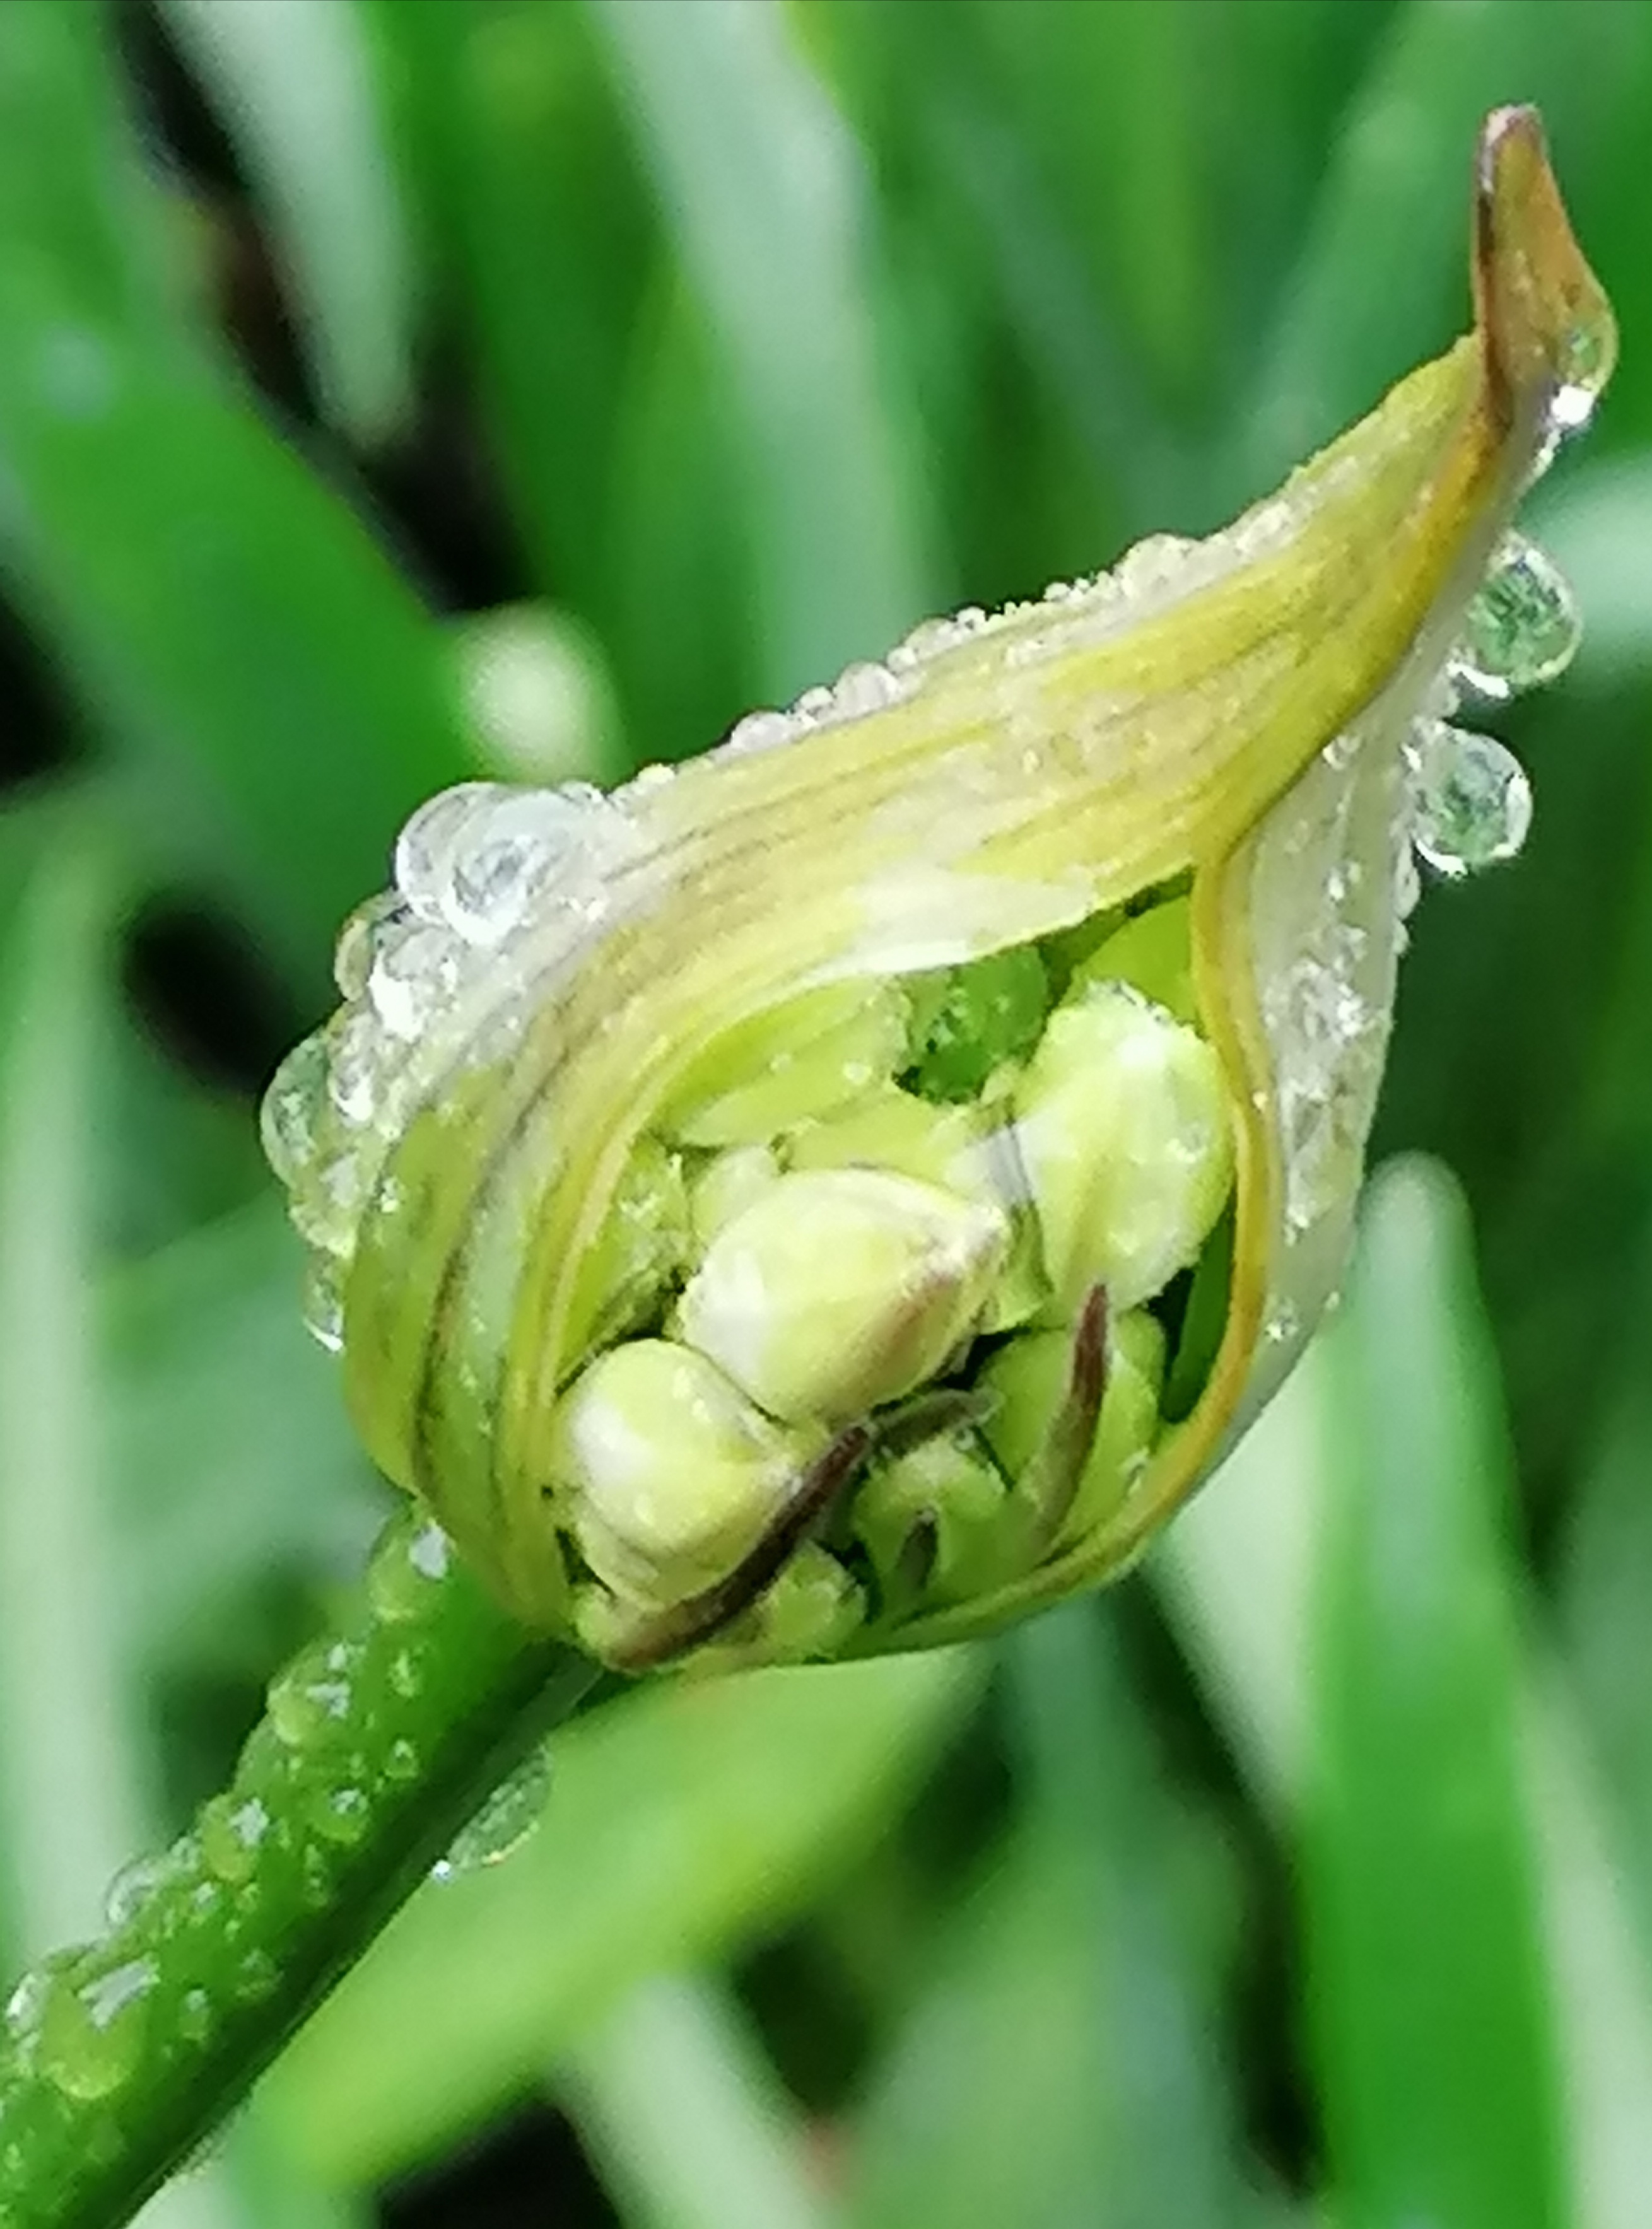 Flower bud opening